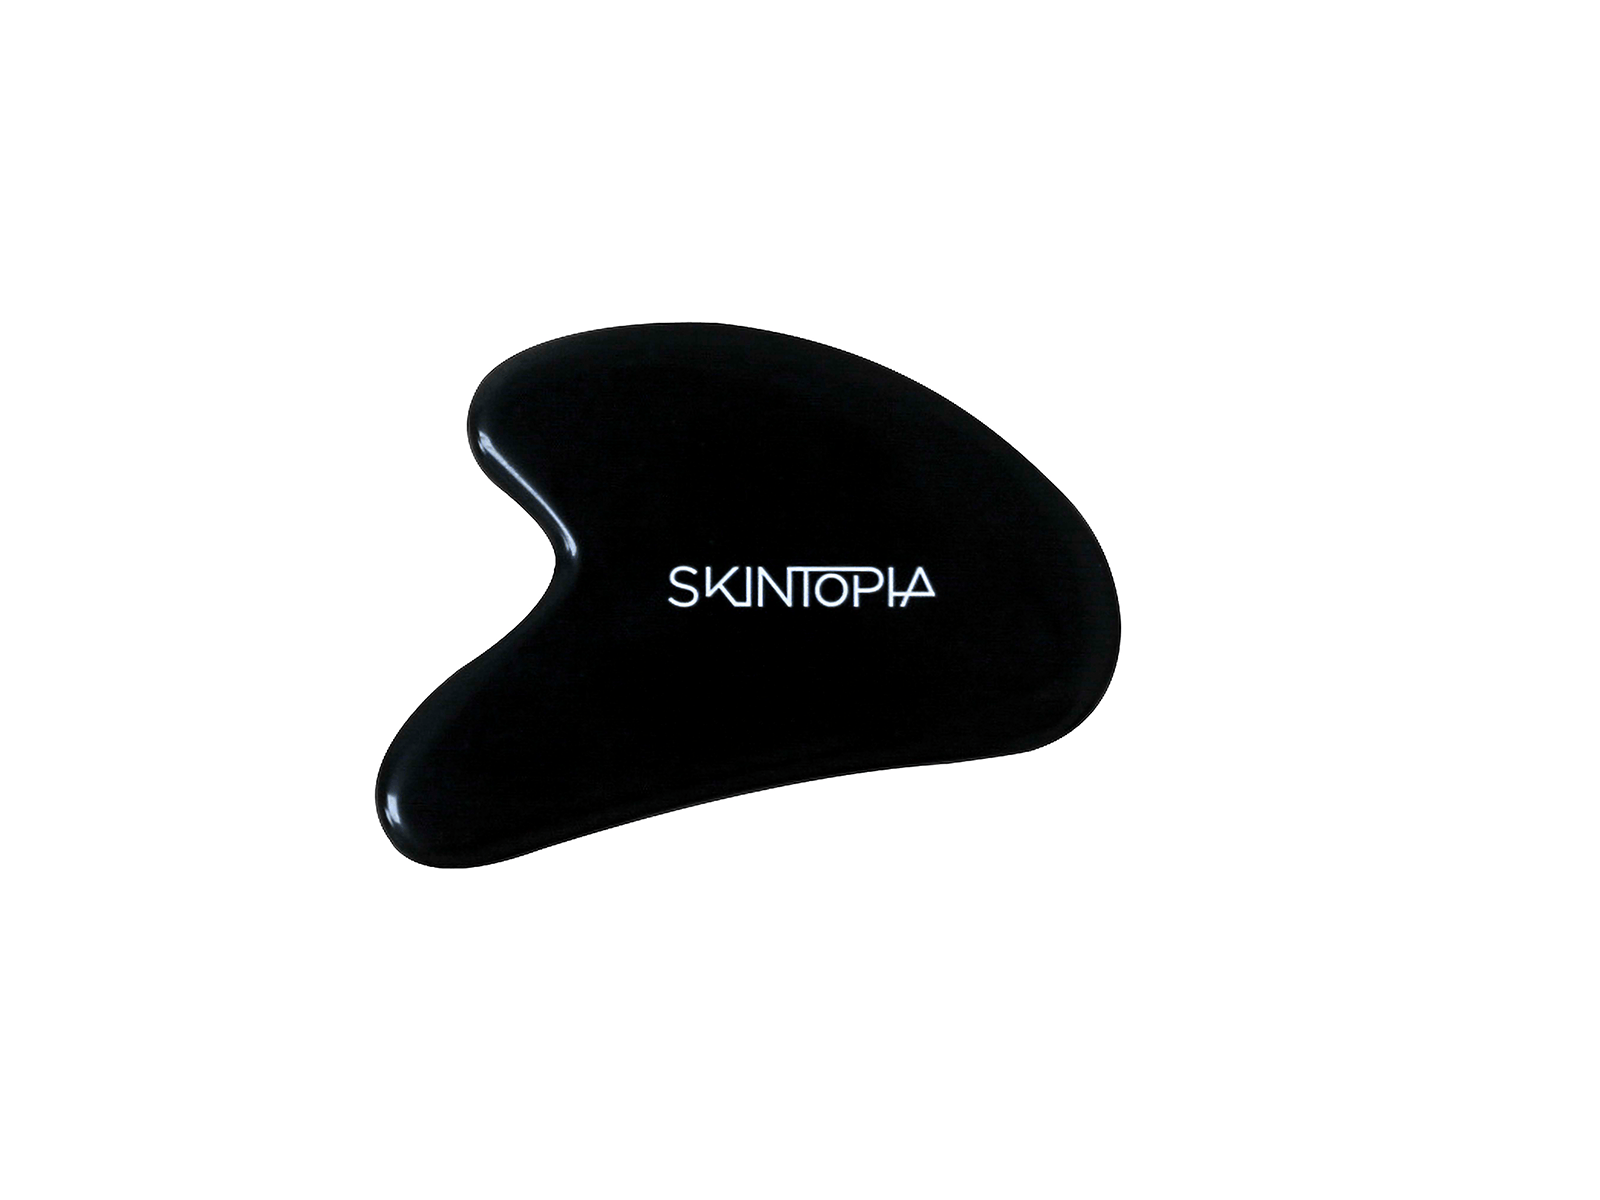 Skintopia Black Obsidian Gua Sha, $35